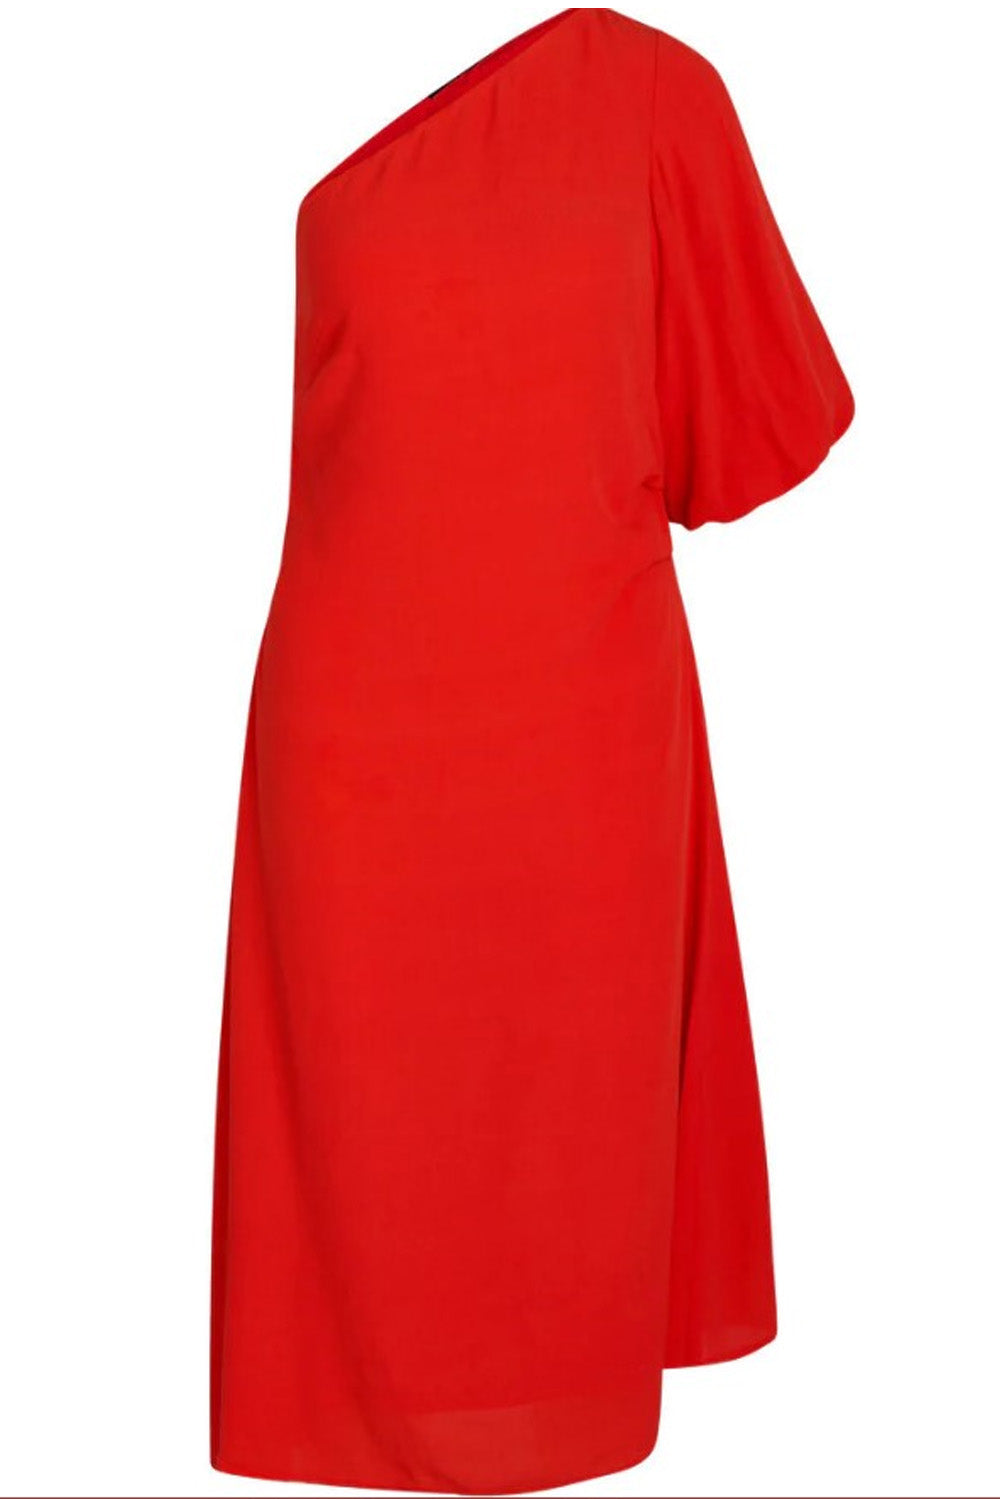 Plethora Red Dress